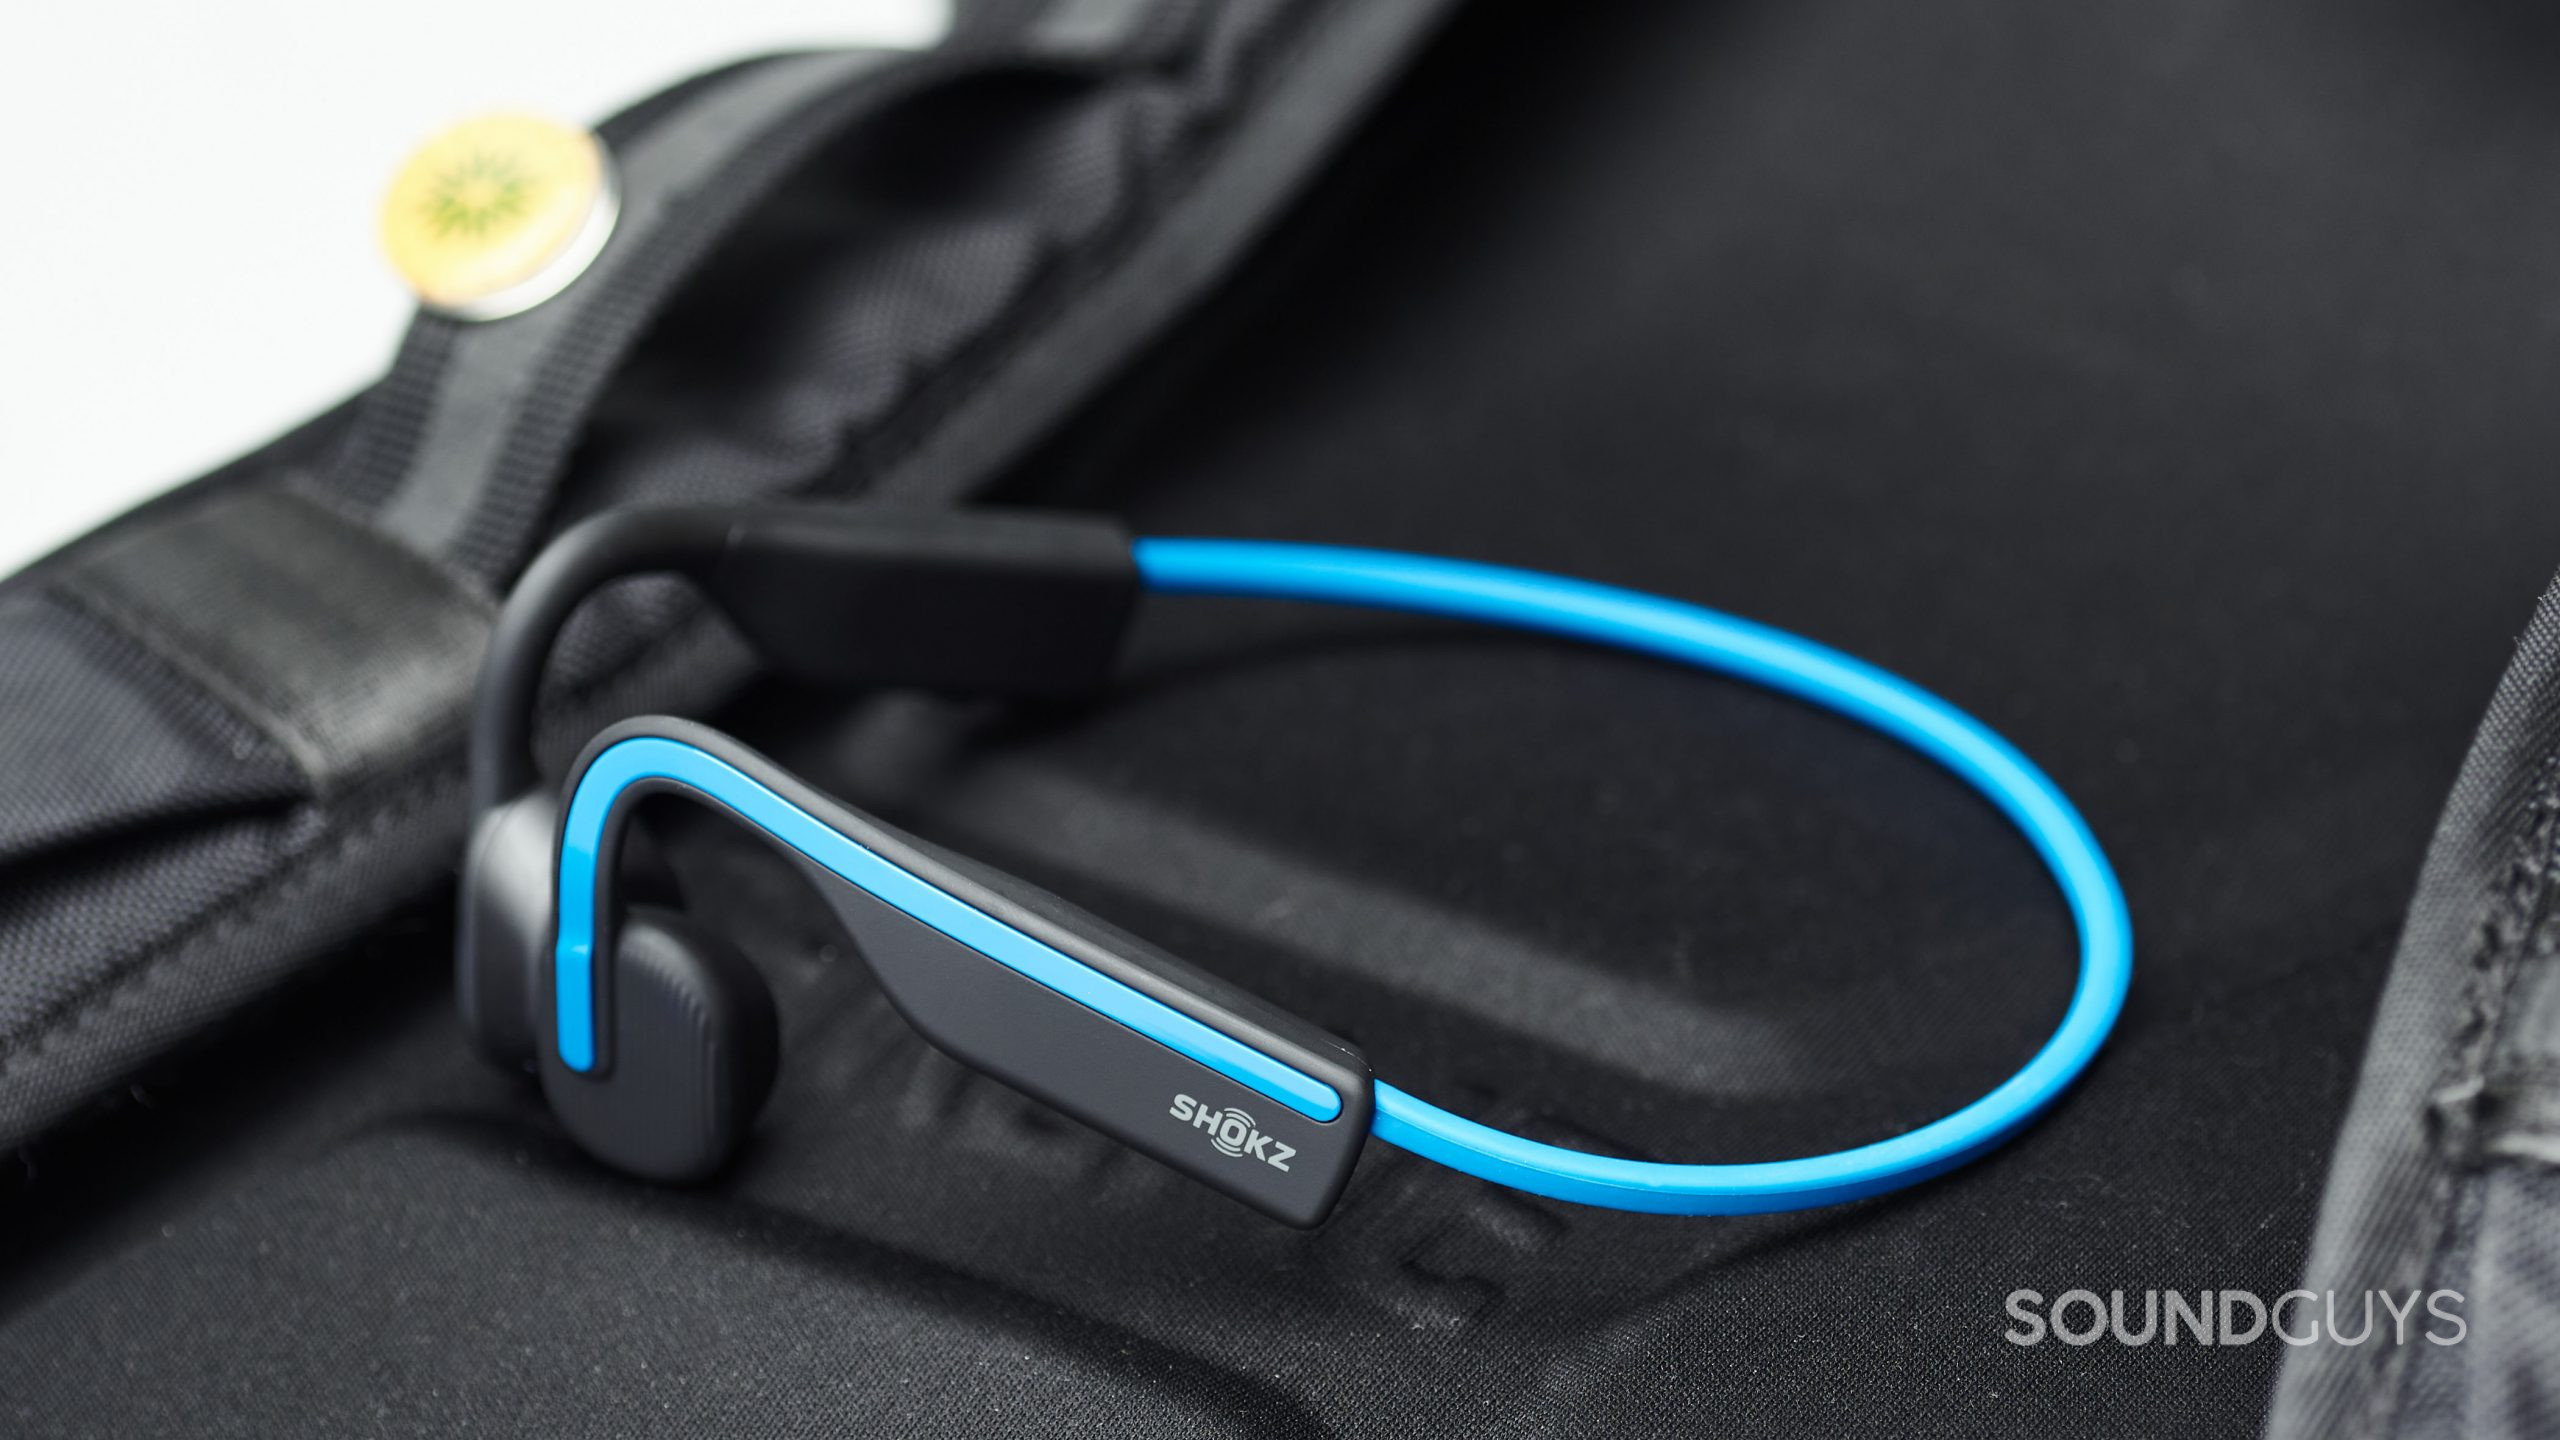 The Shokz OpenMove bone conduction headphones on a backpack.